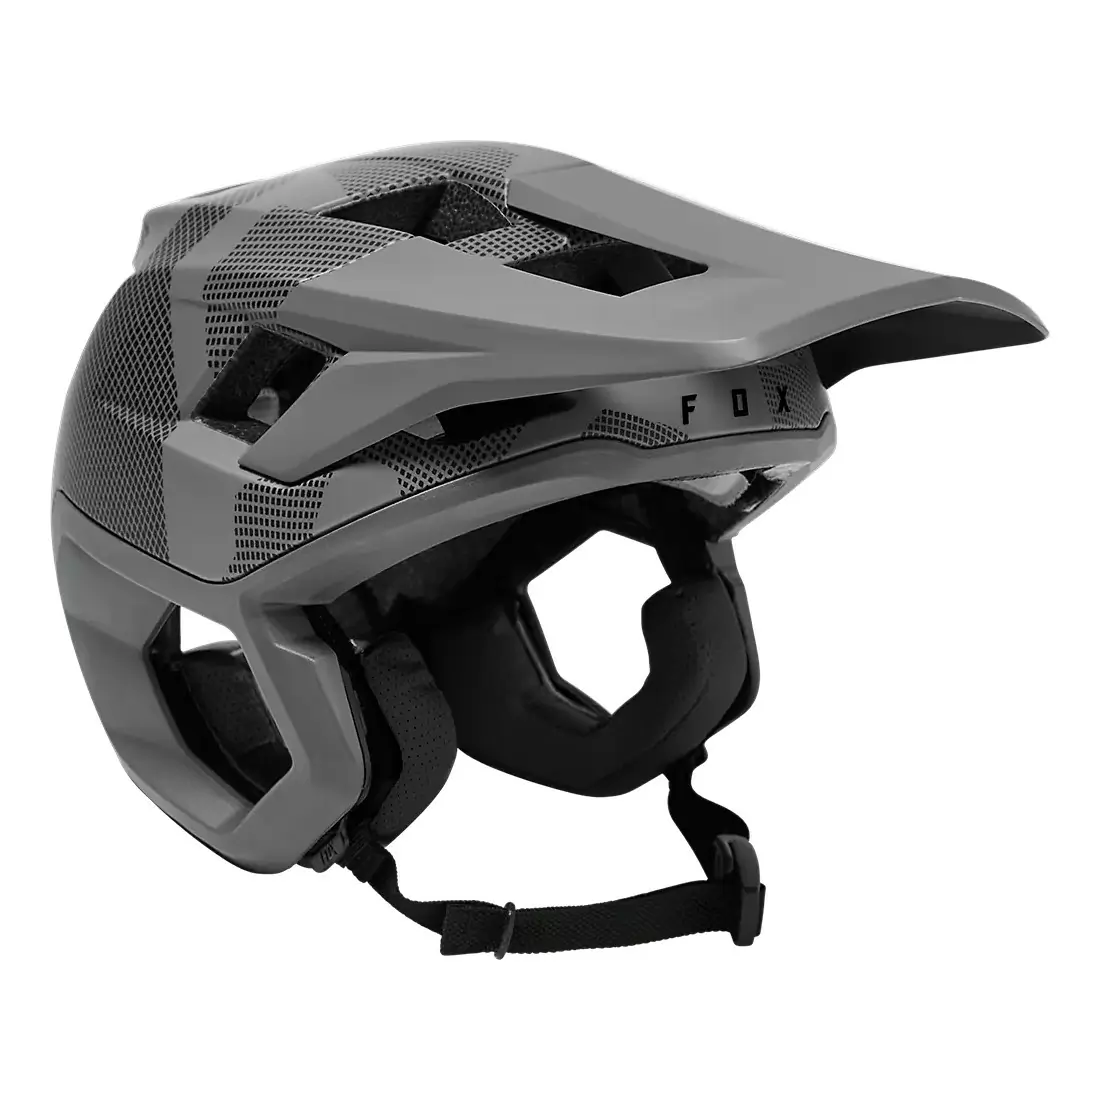 Dropframe Pro Camo Enduro Helmet Gray Camouflage Size S (52-54 cm) - image